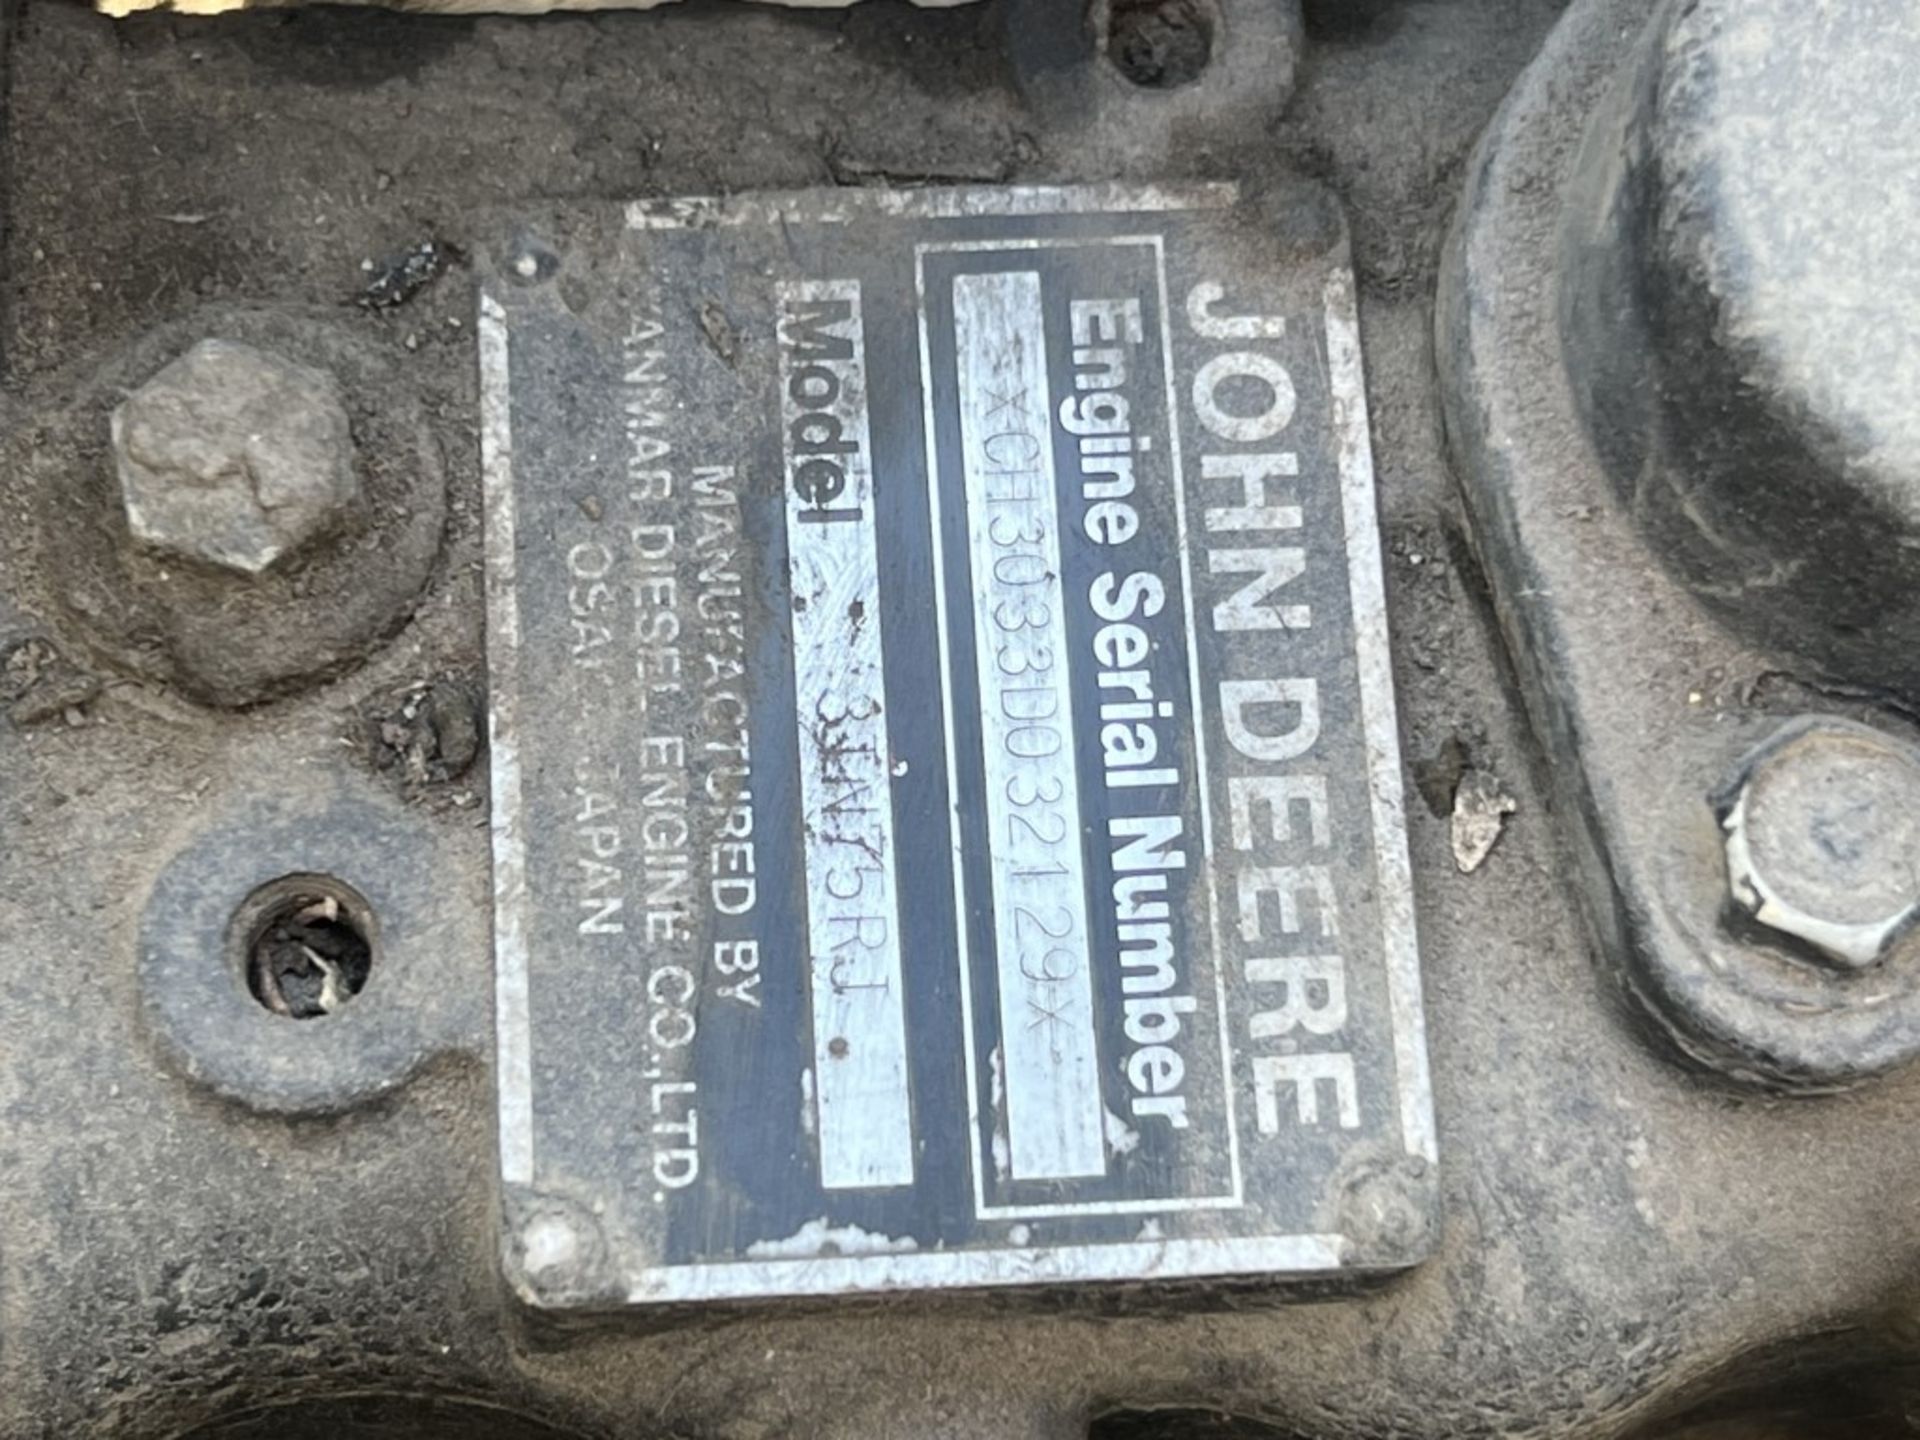 1998 John Deere 855 Utility Tractor - Image 10 of 23